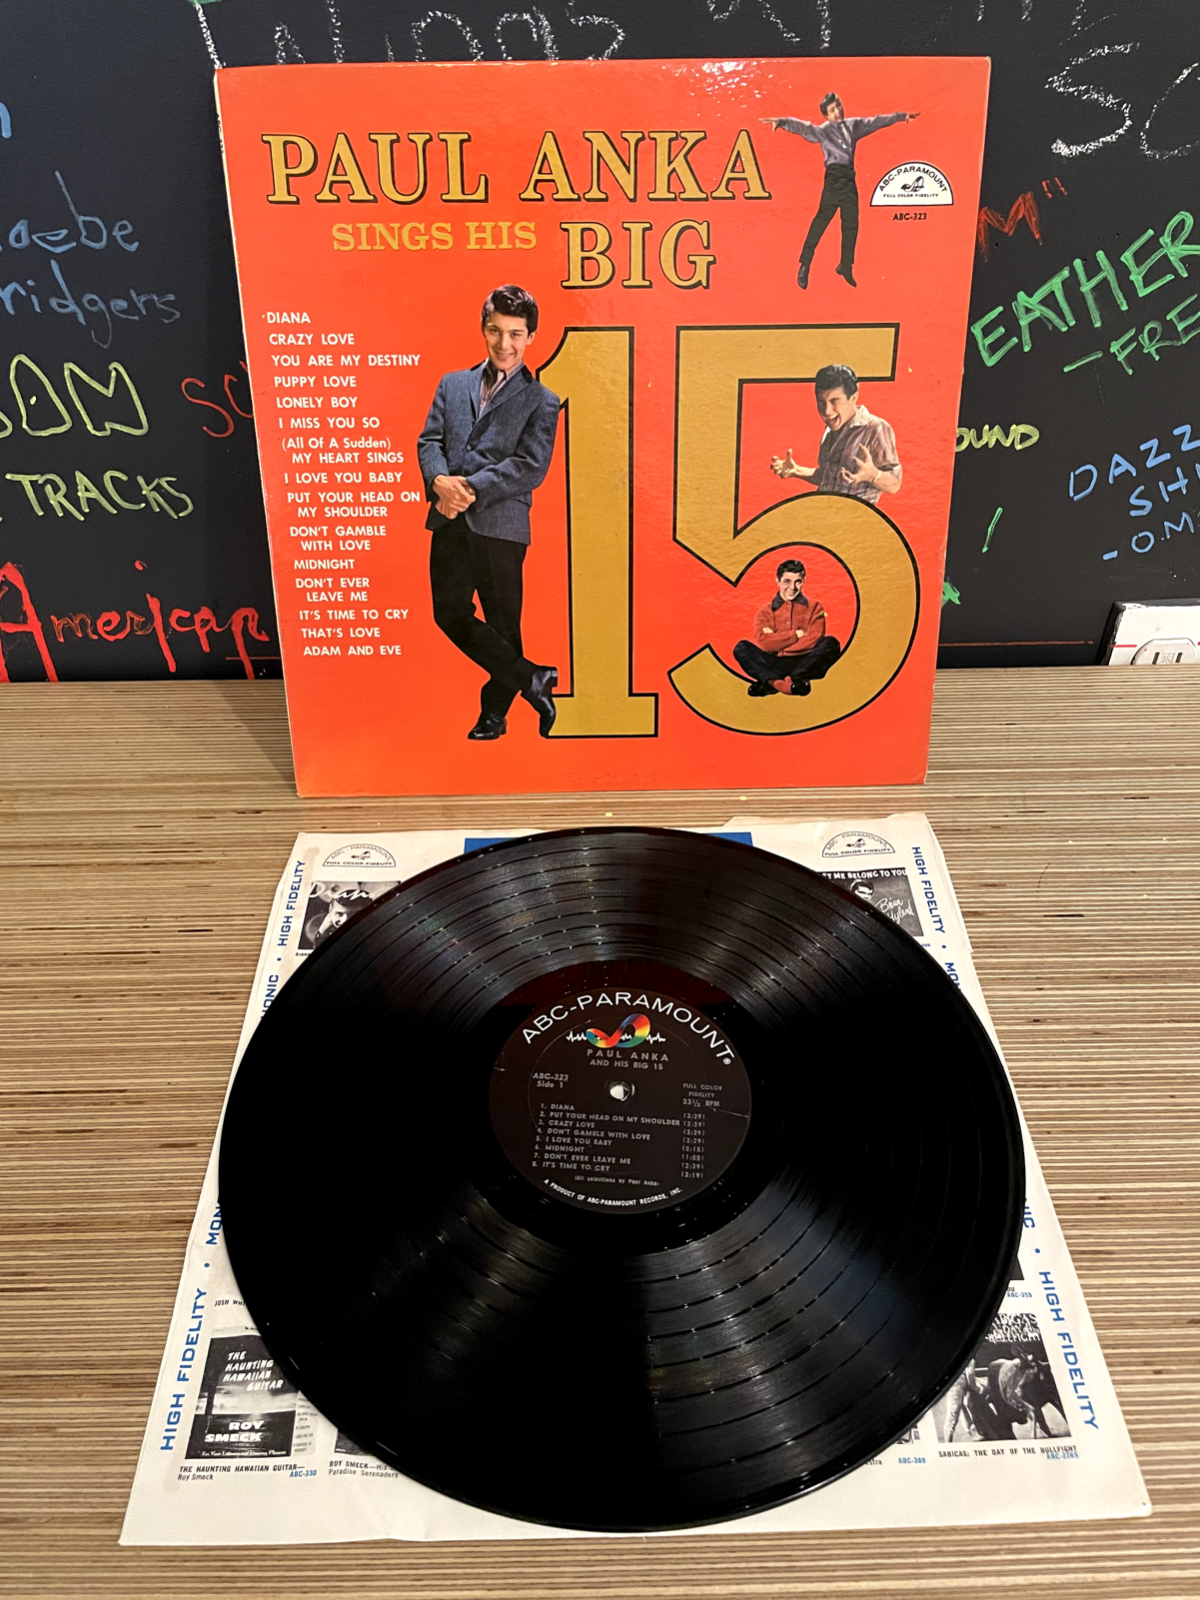 PAUL ANKA SINGS HIS BIG 15 (VG+) ABC-323 LP VINYL RECORD VG